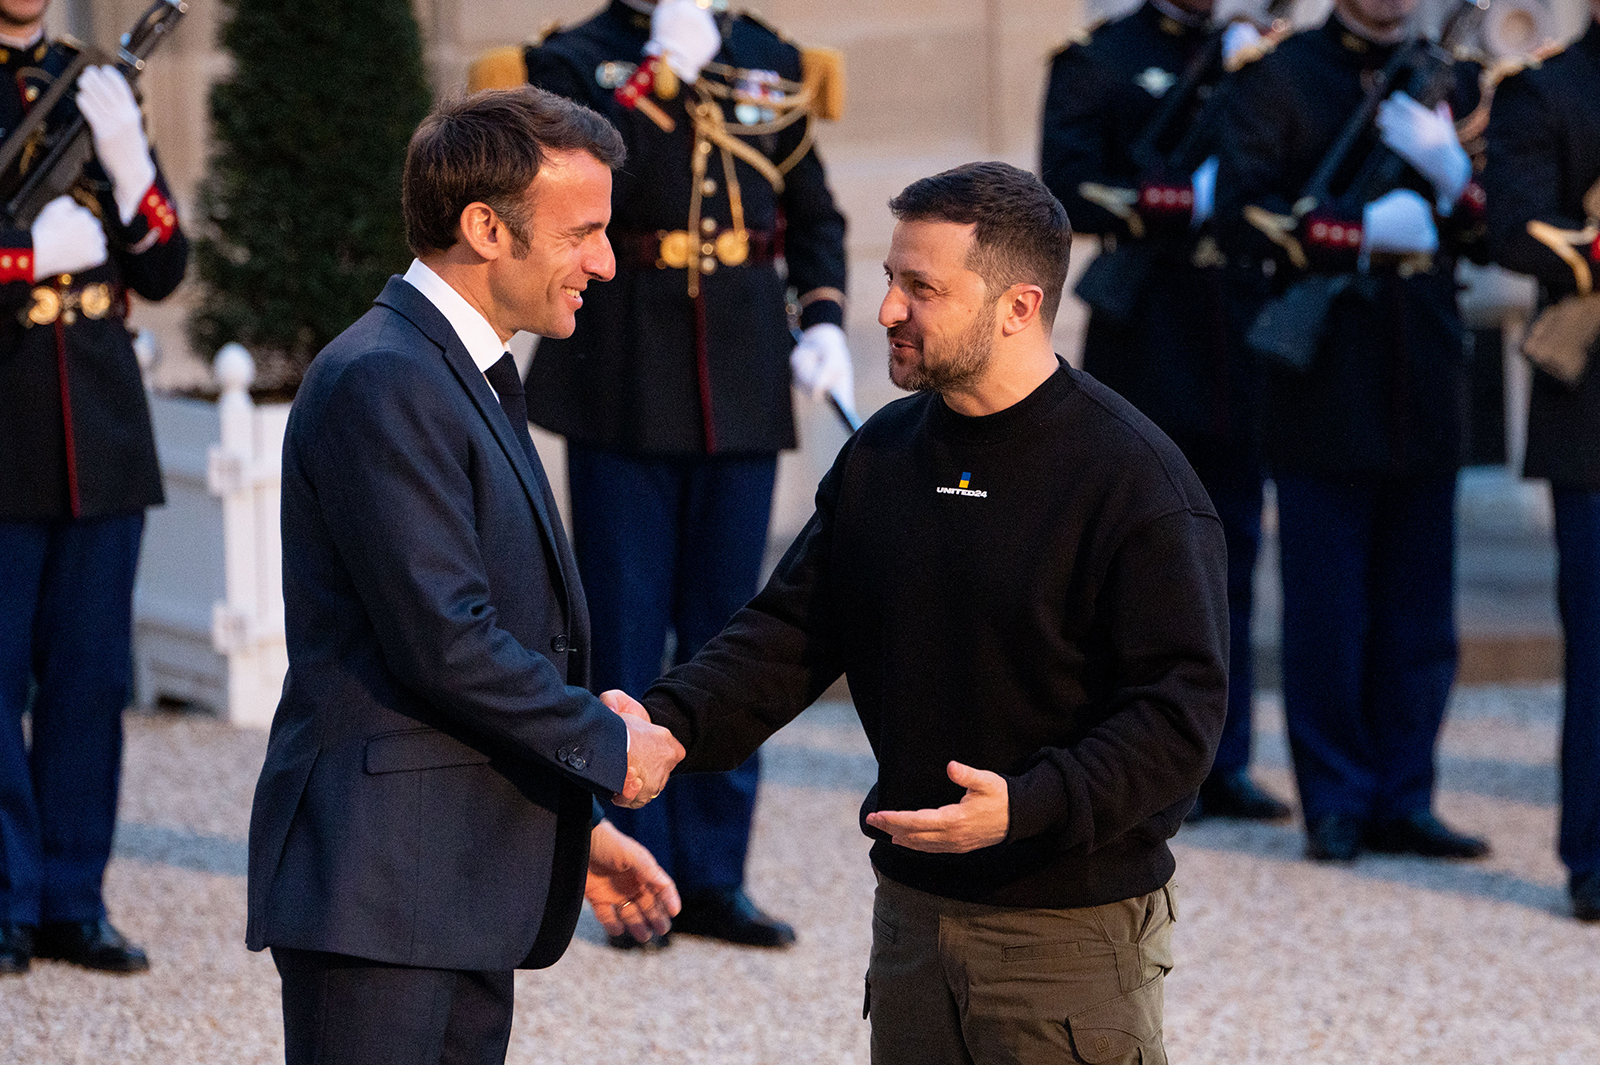 Emmanuel Macron greets Volodymyr Zelenskiy ahead of a meeting at the Elysee Palace in Paris, France, on Sunday, May 14.